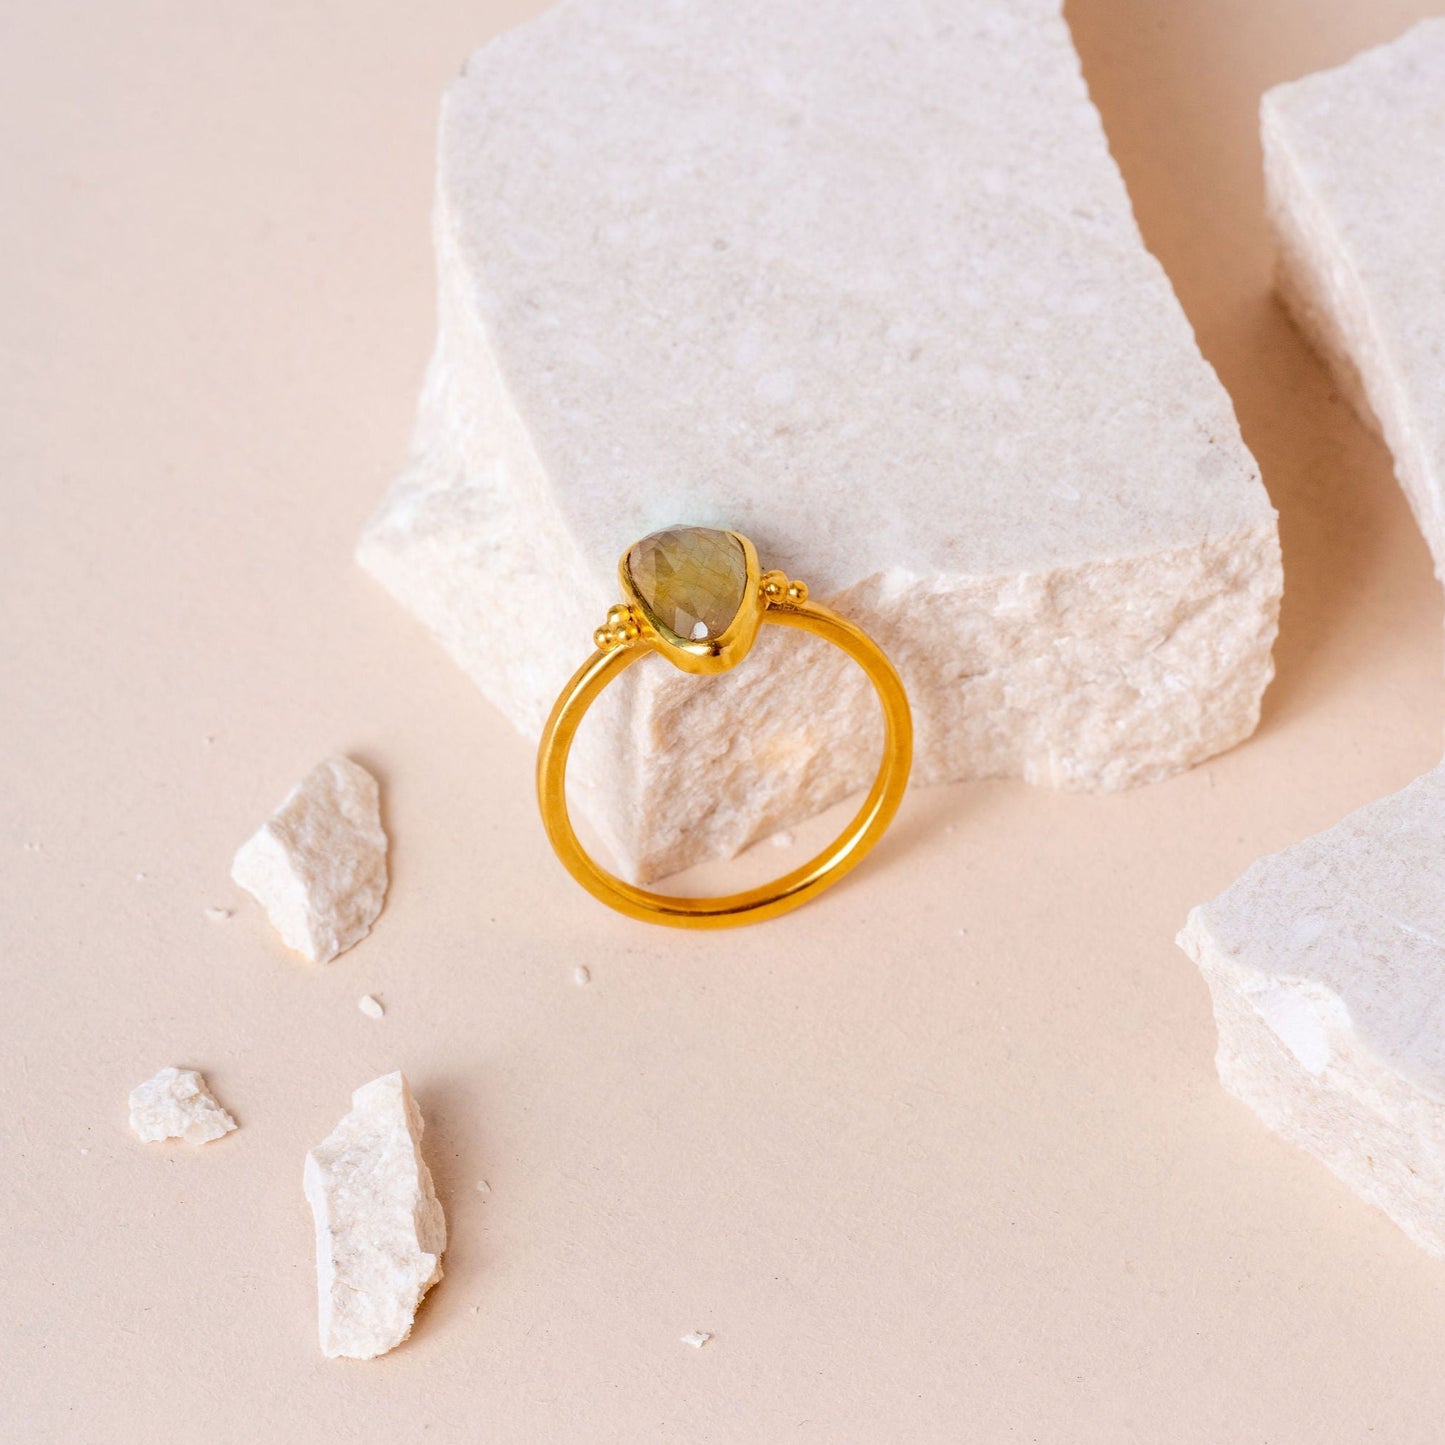 Artisan ring showcasing a light yellow teardrop sapphire and meticulous granulation craftsmanship.